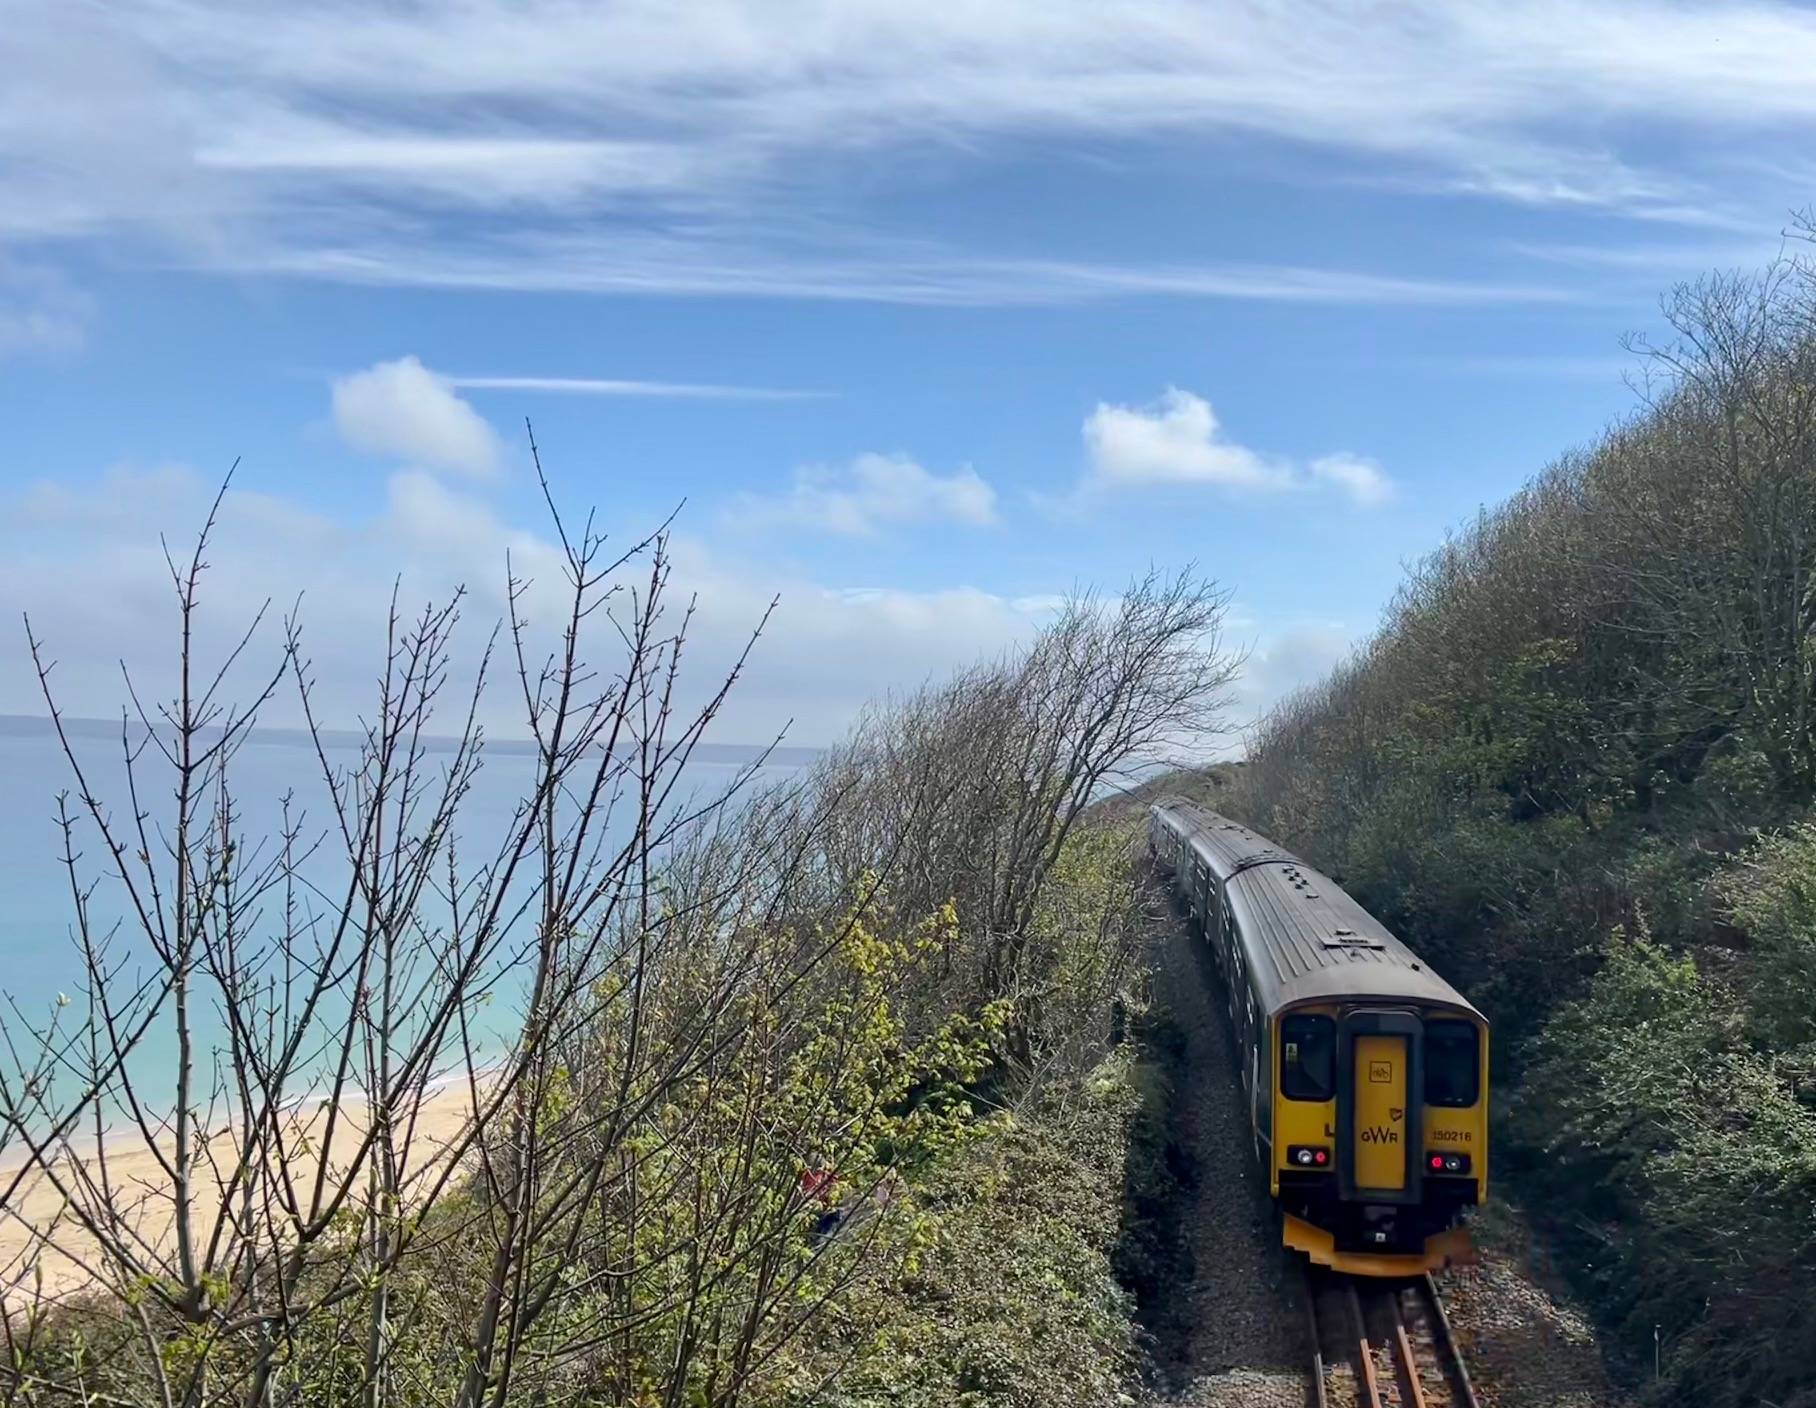 GWR train on track next to Cornish coast